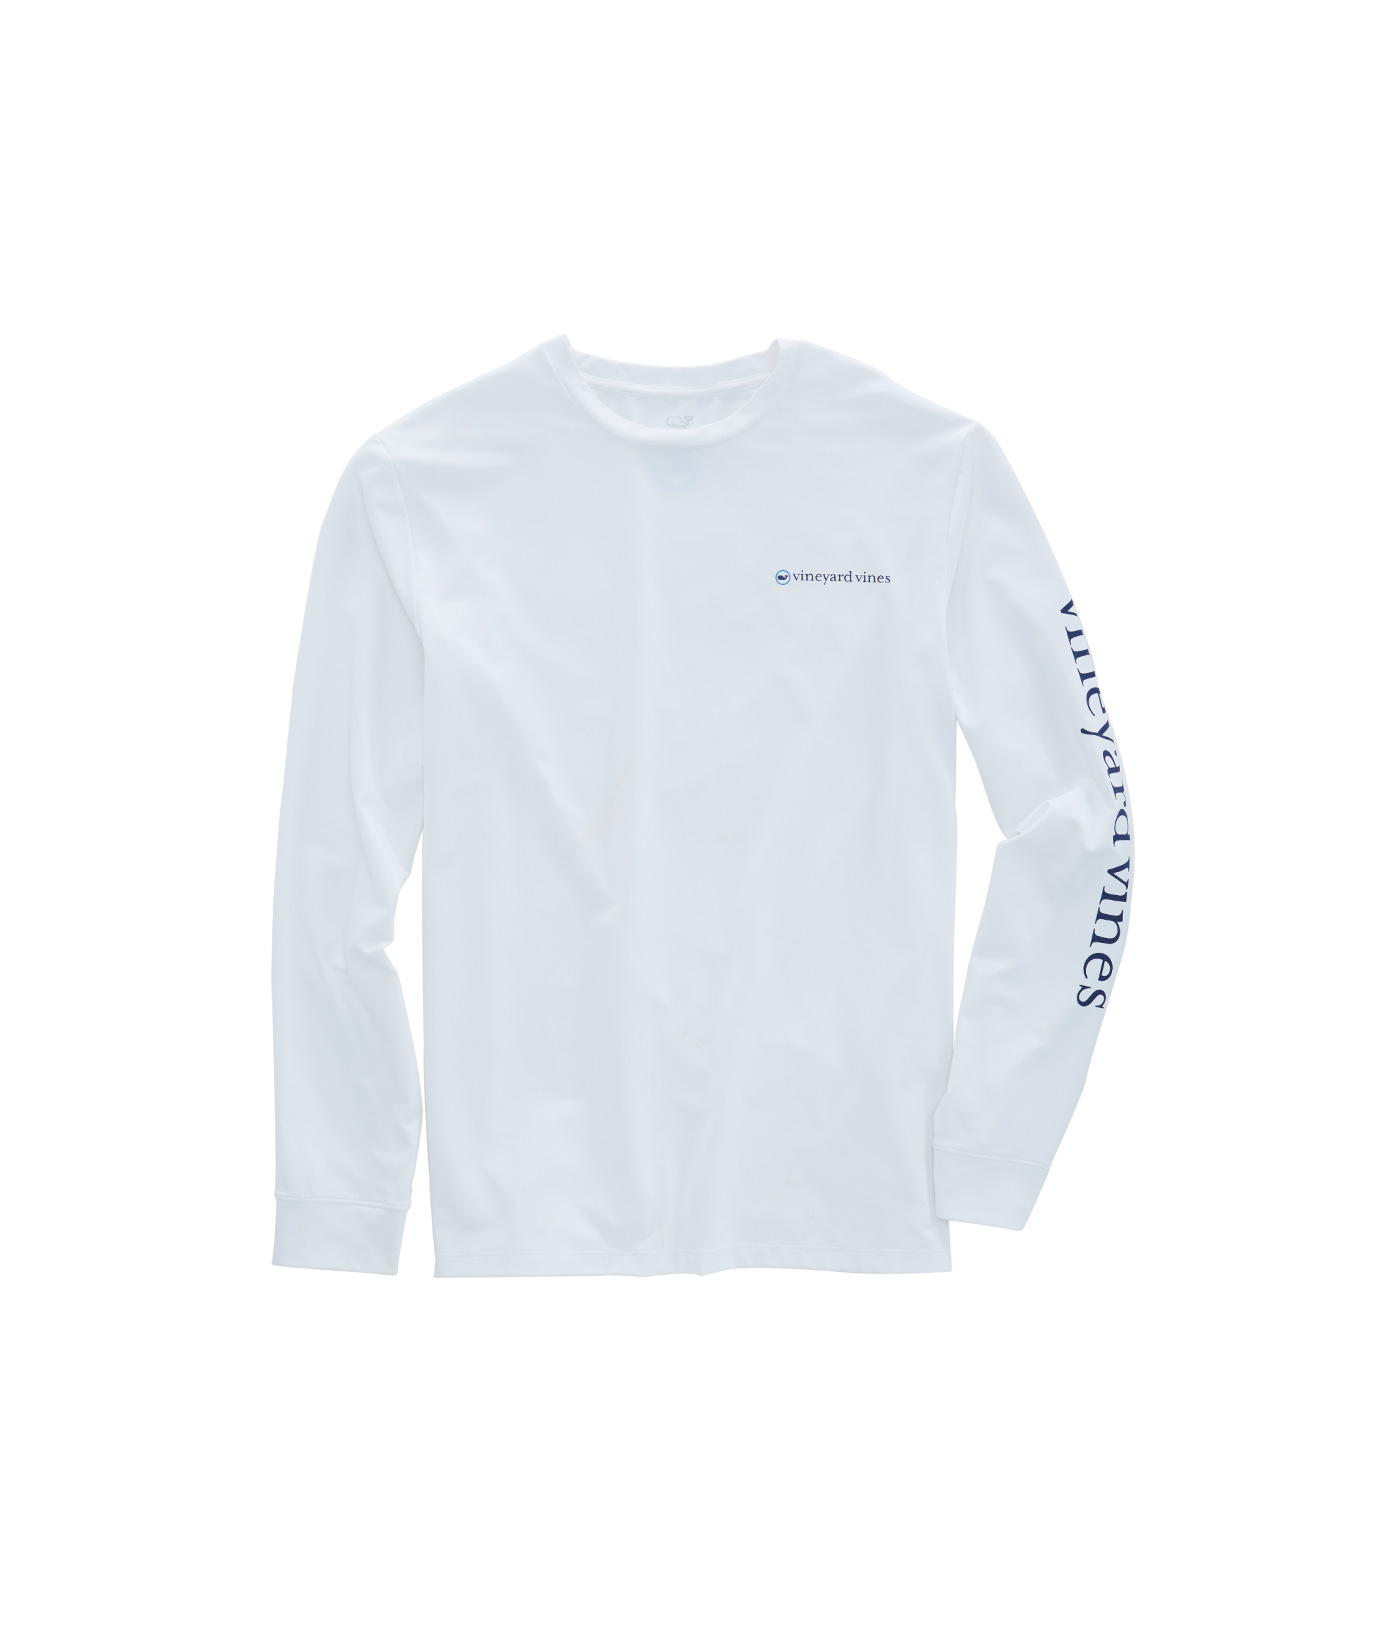 Vineyard Vines Performance Long Sleeve Fishing Shirt Mens XL